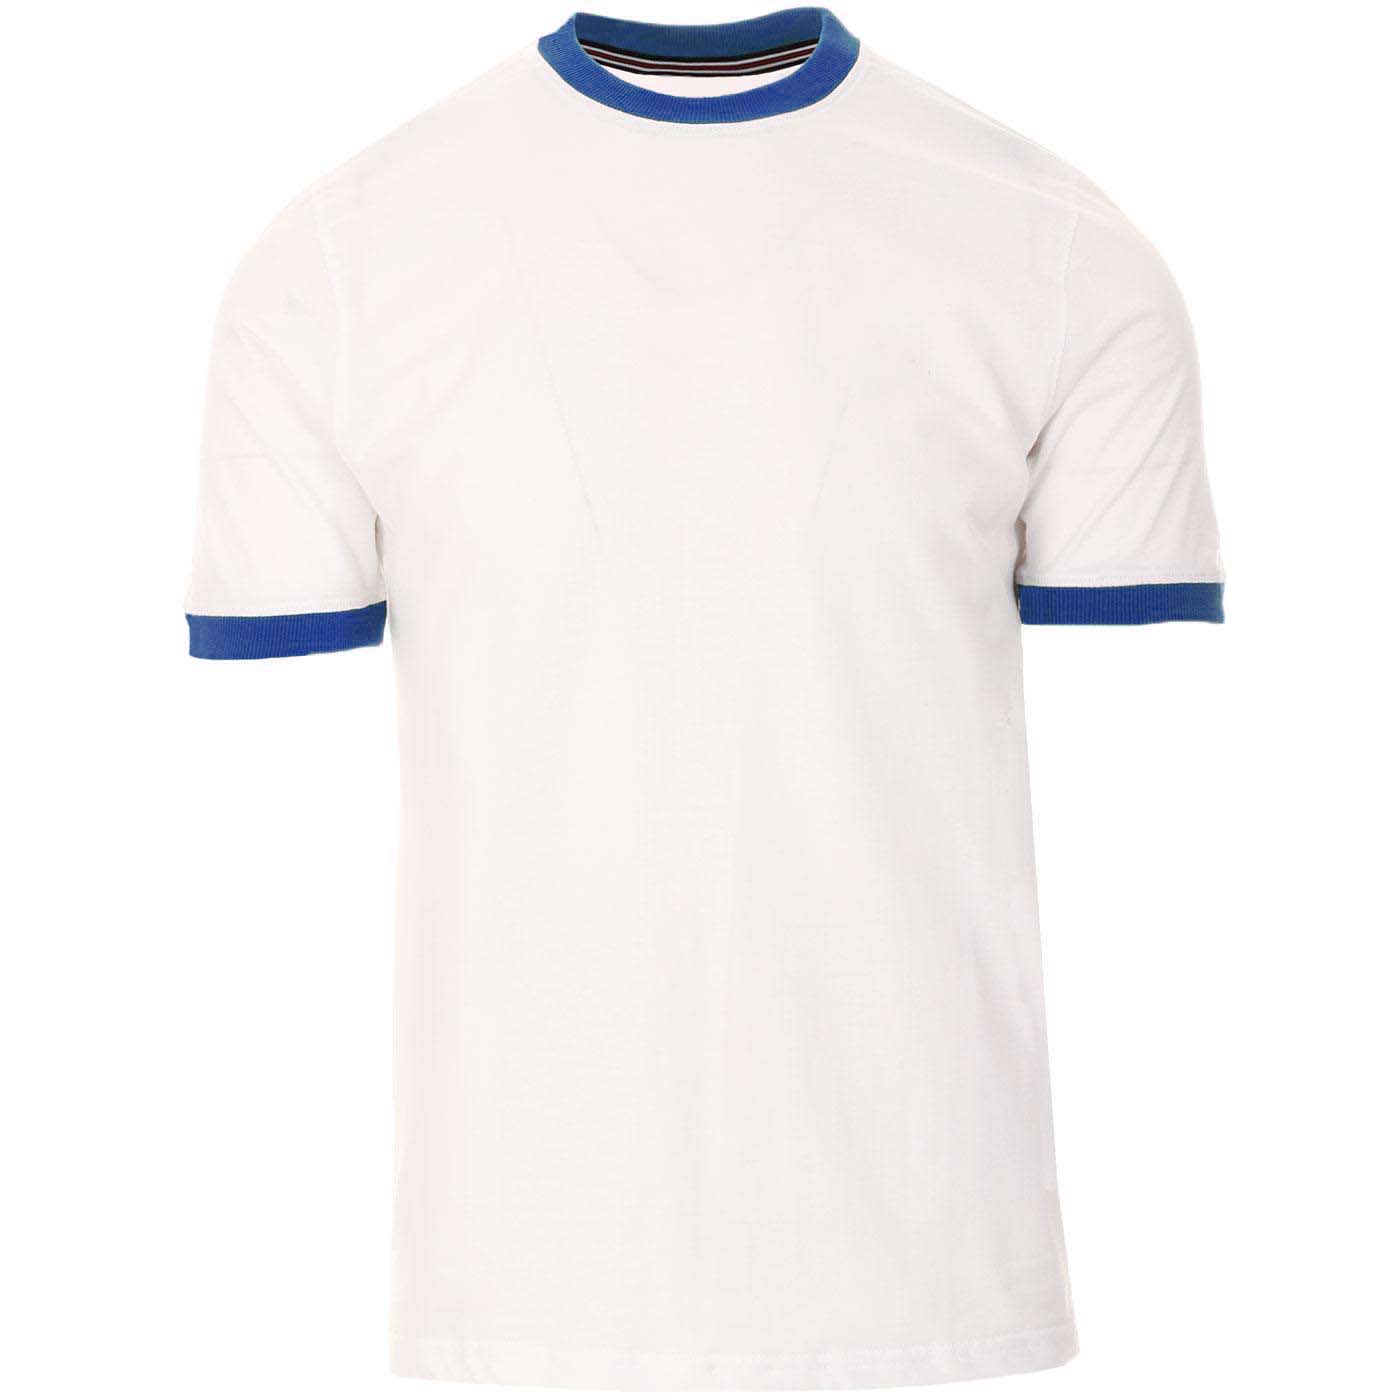 Men's White Cotton T-Shirt With Blue Crew Neck